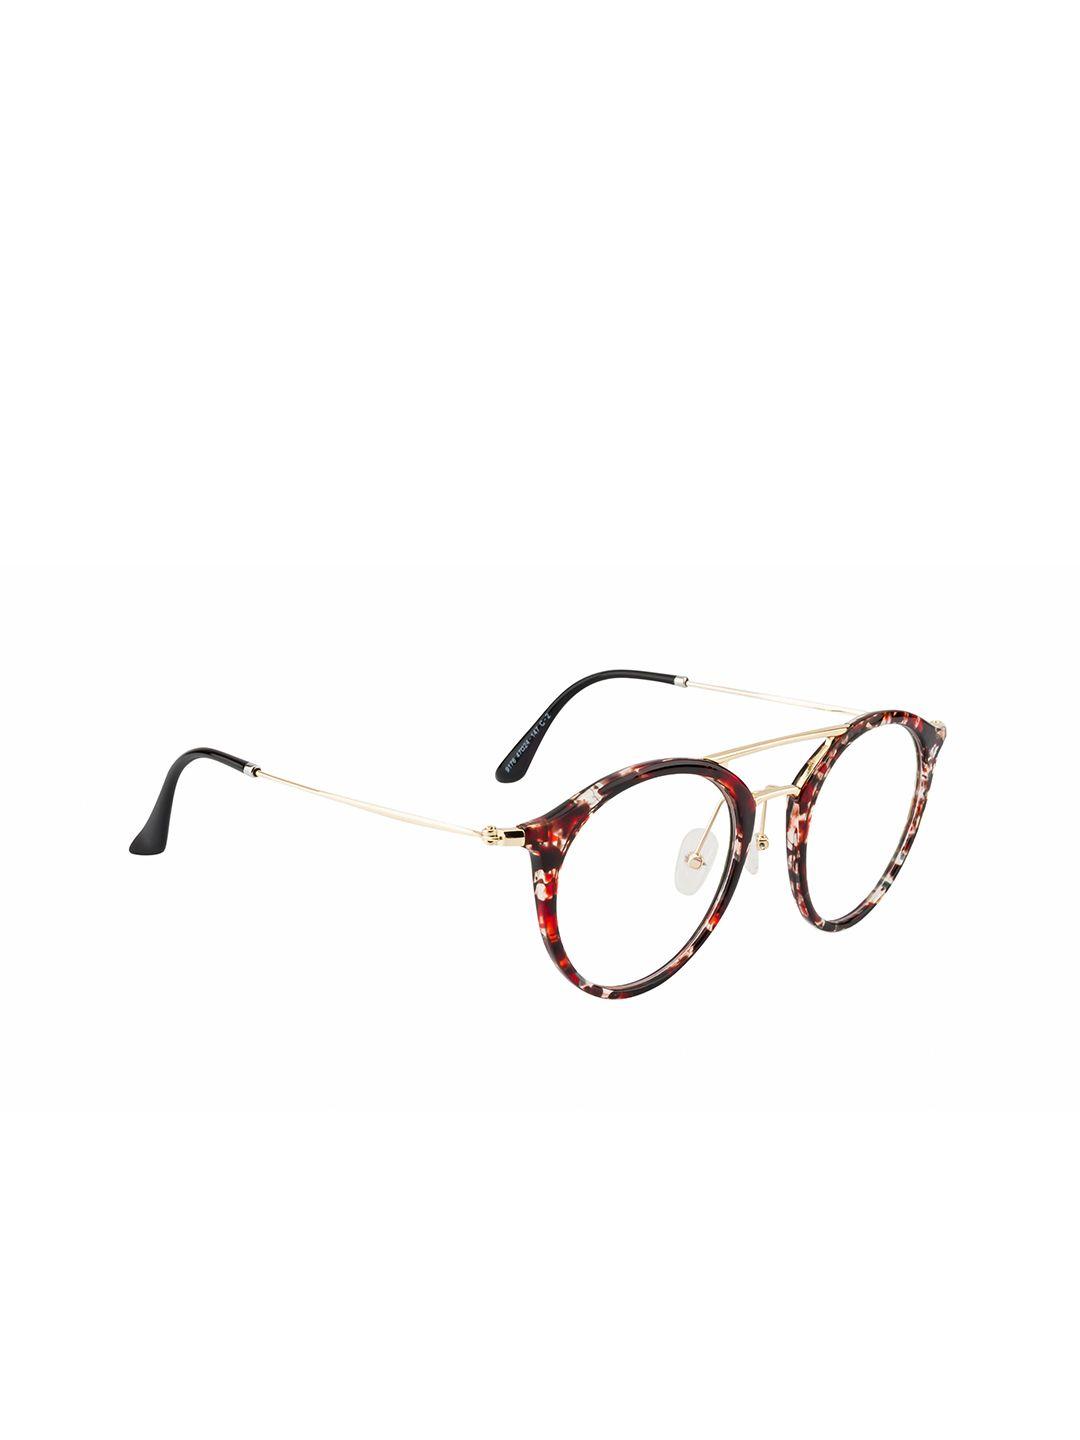 ted smith unisex gold-toned & red full rim round frames eyeglasses